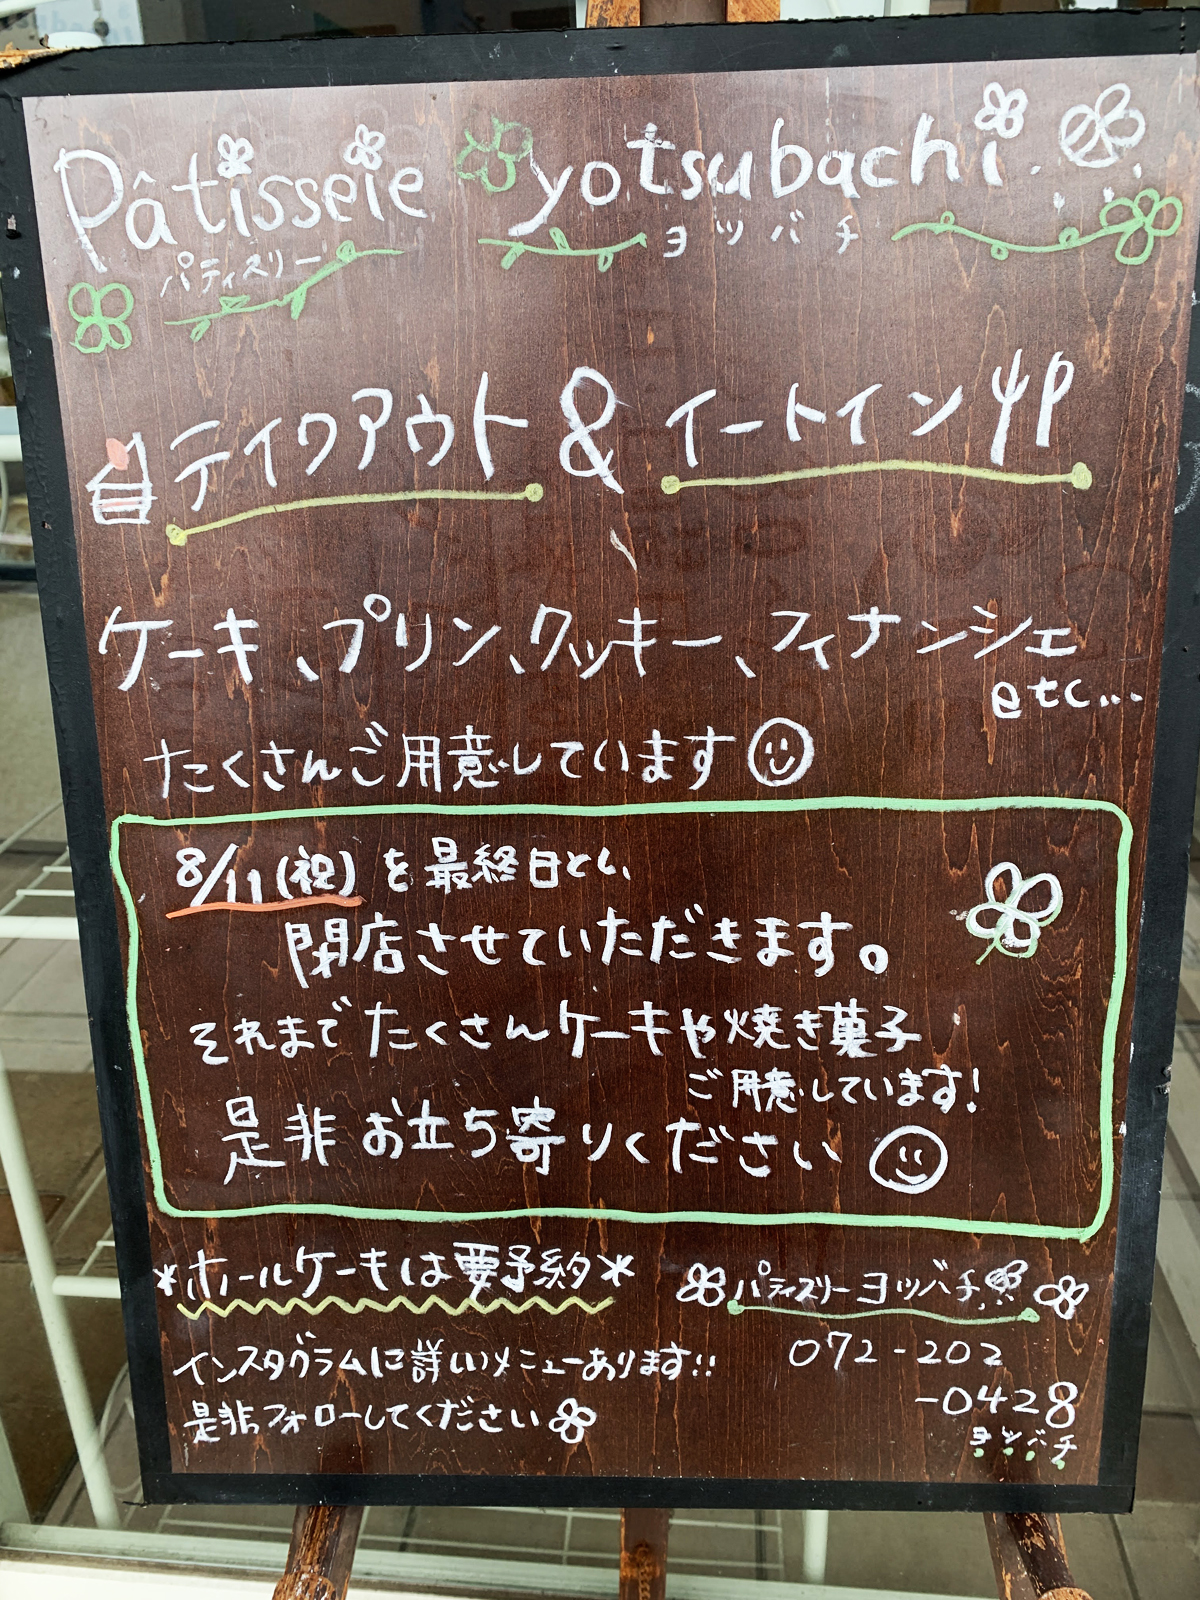 Cake&Cafe yotsubachi